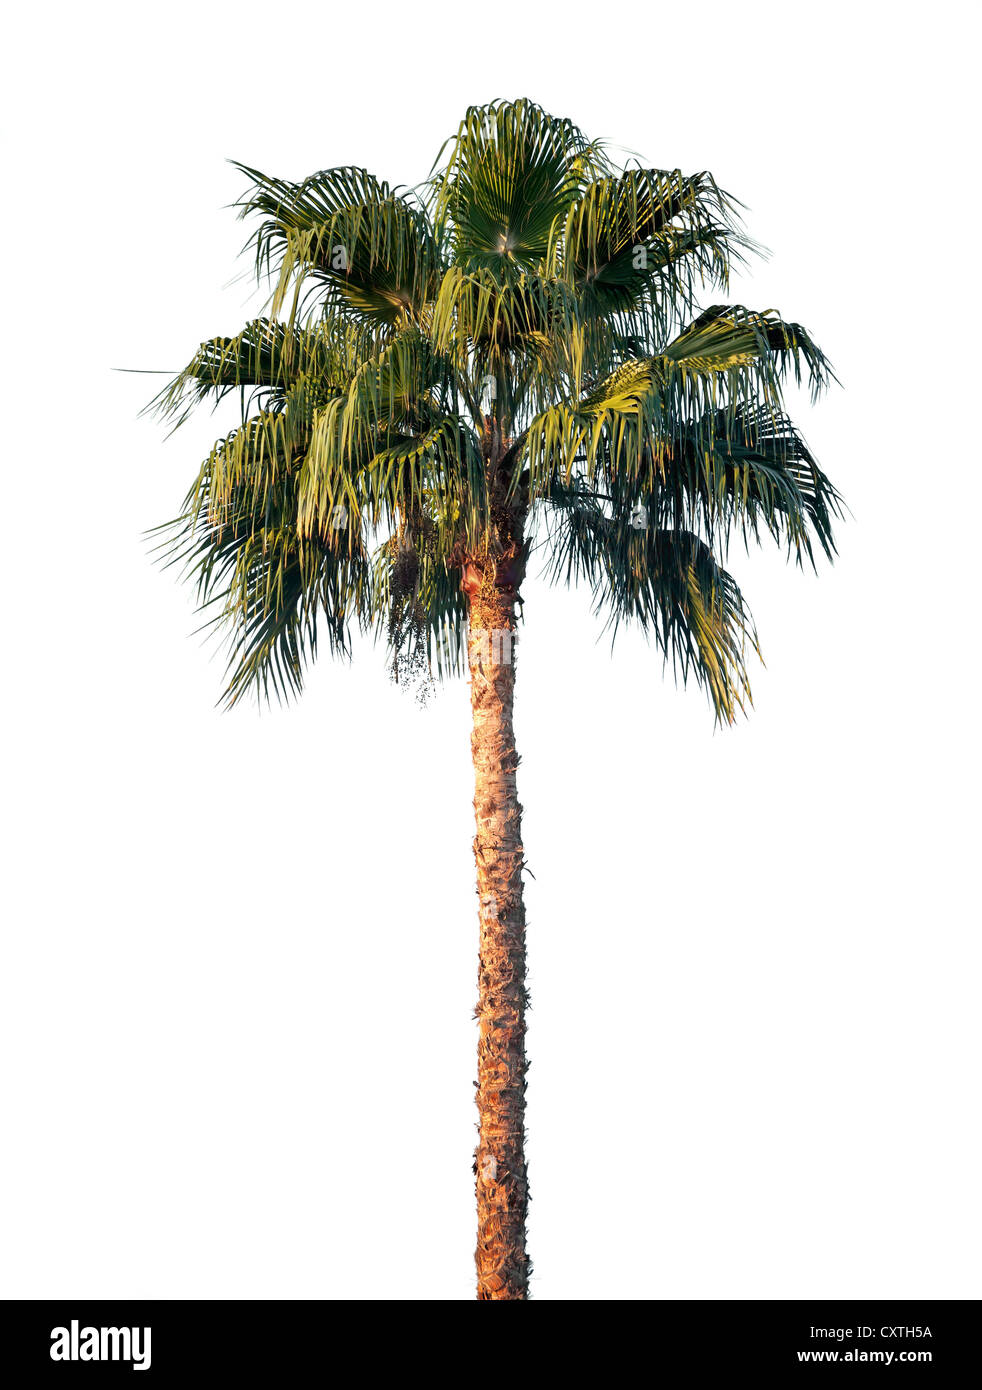 palm tree white background